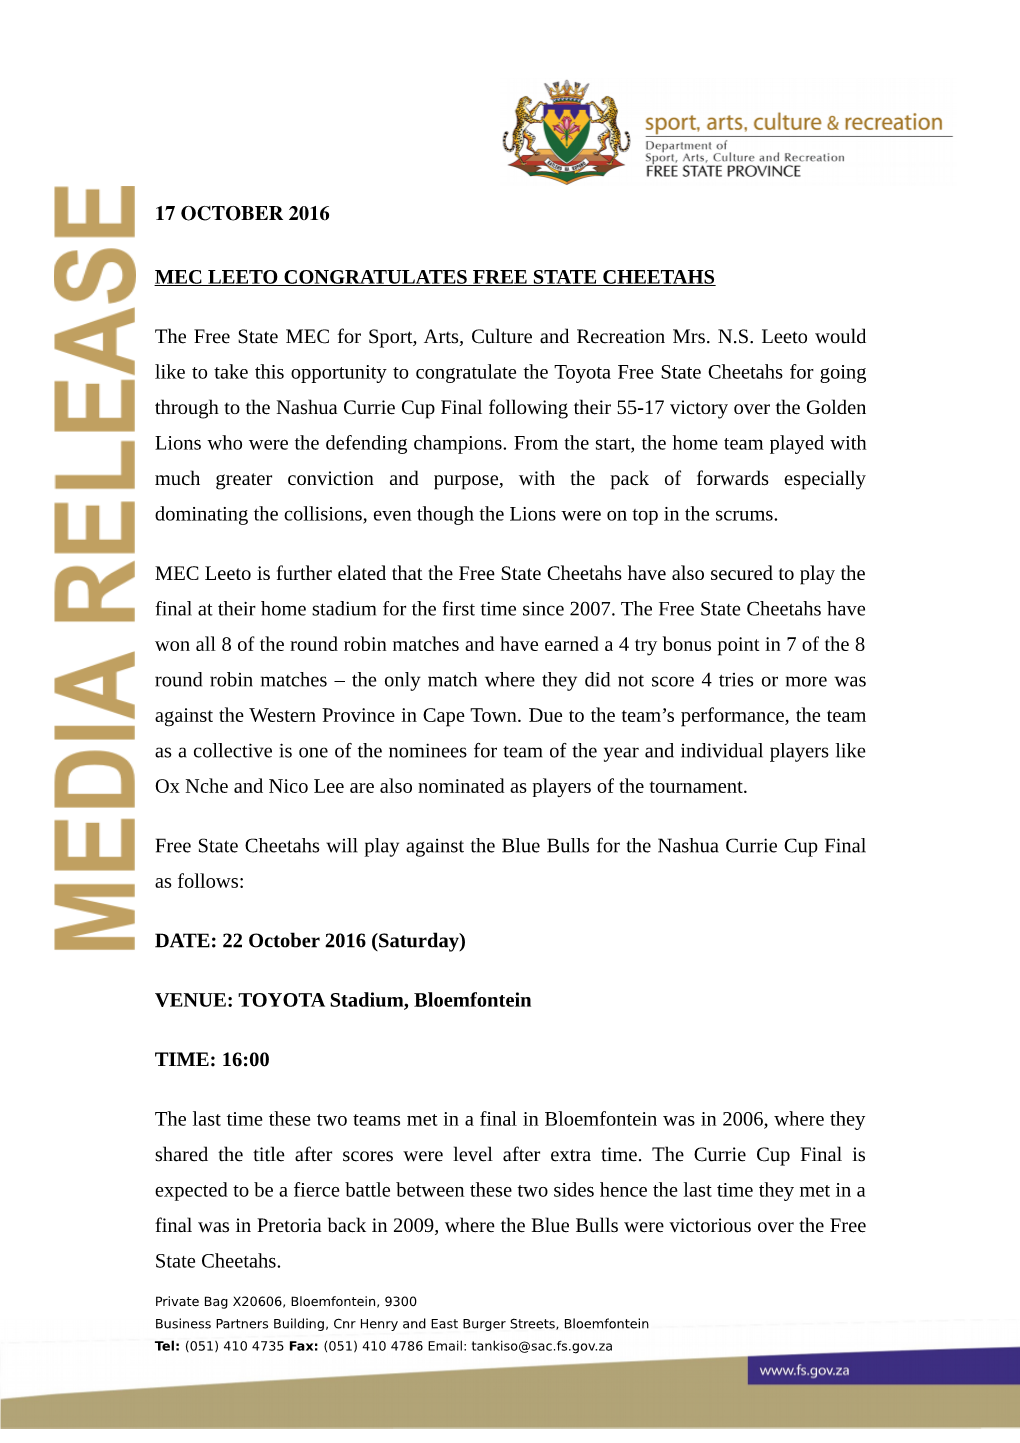 Media Release MEC Leeto Congratulates FS Cheetahs